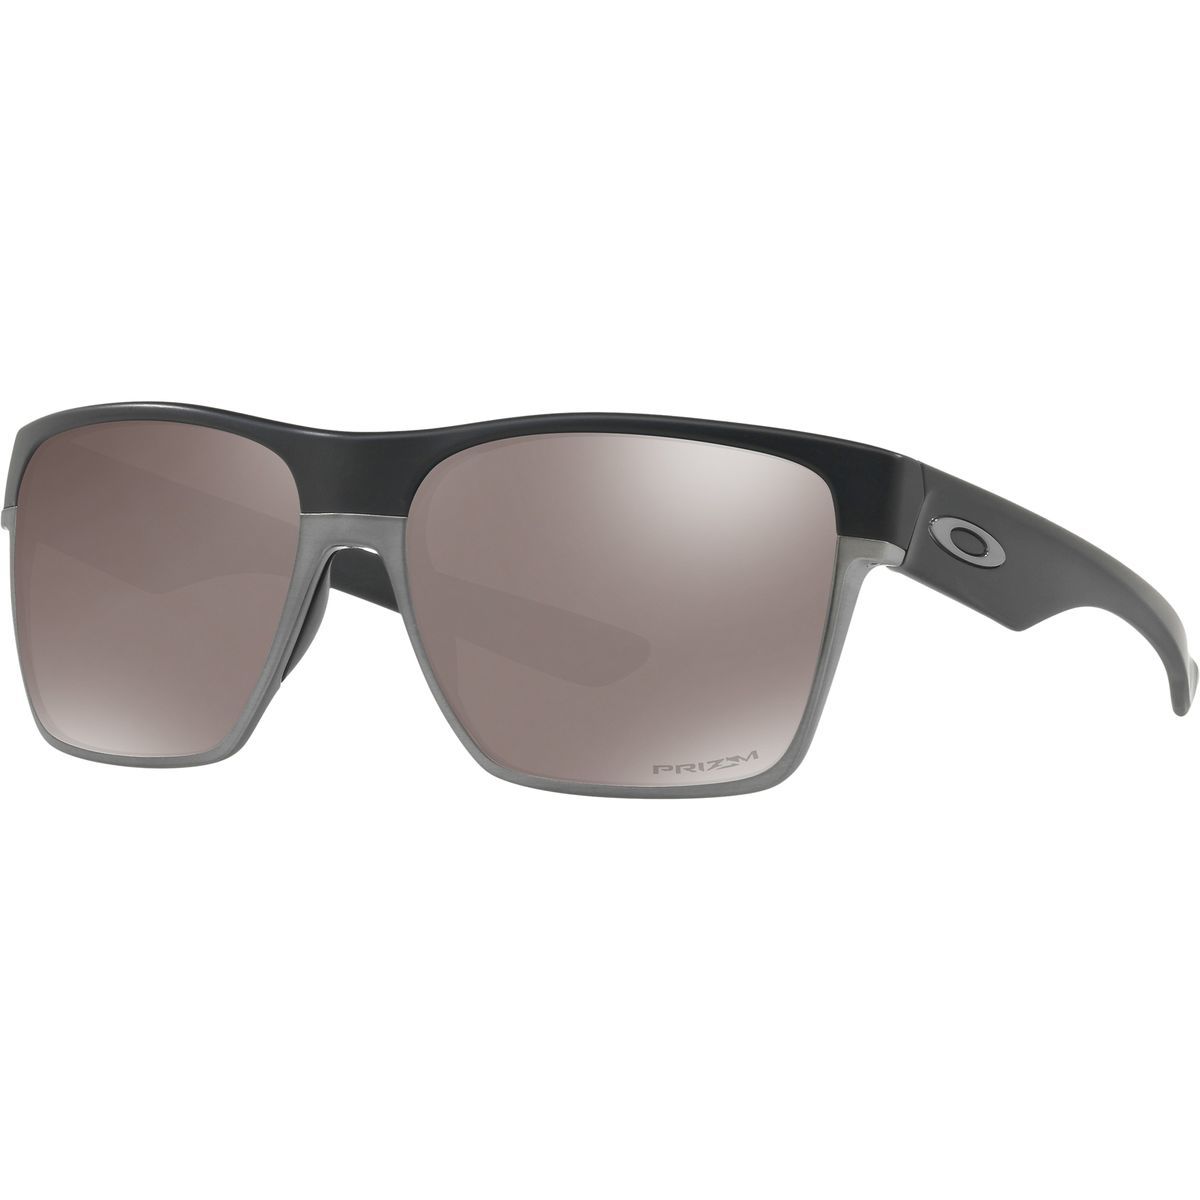 Oakley Twoface XL Prizm Polarized Sunglasses - Men's